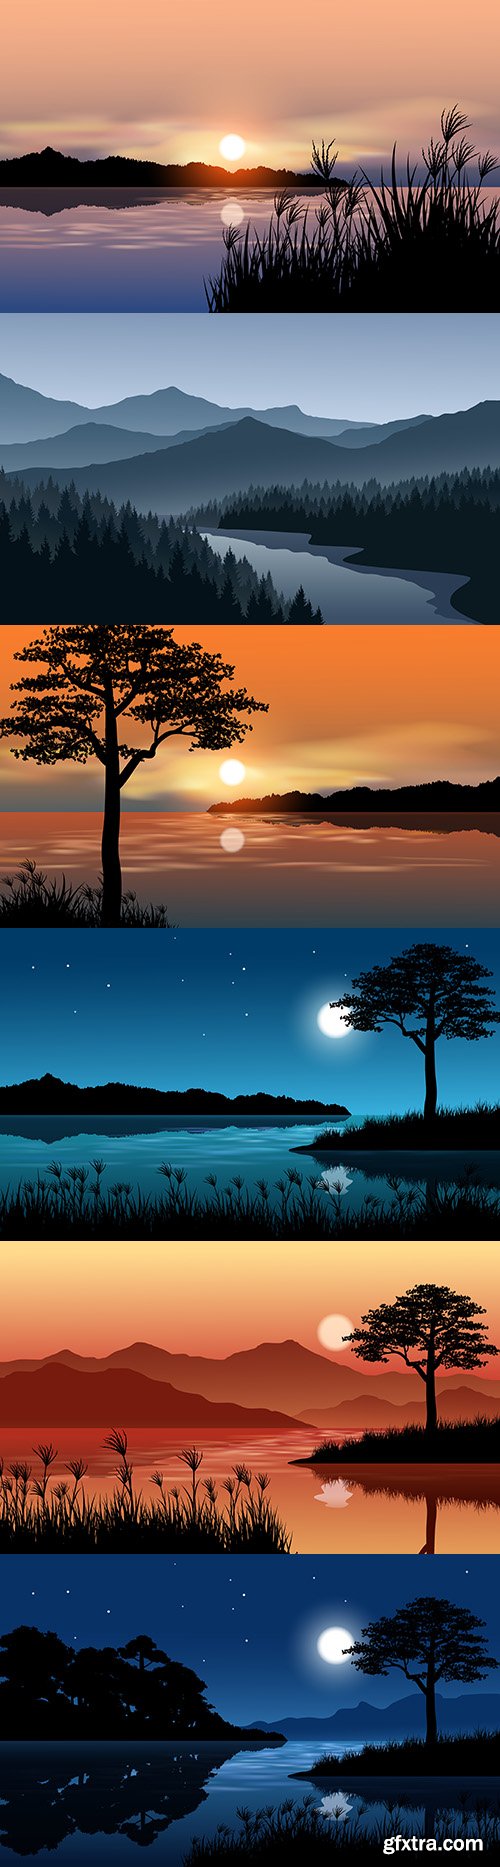 Night landscape at river and sunset illustration